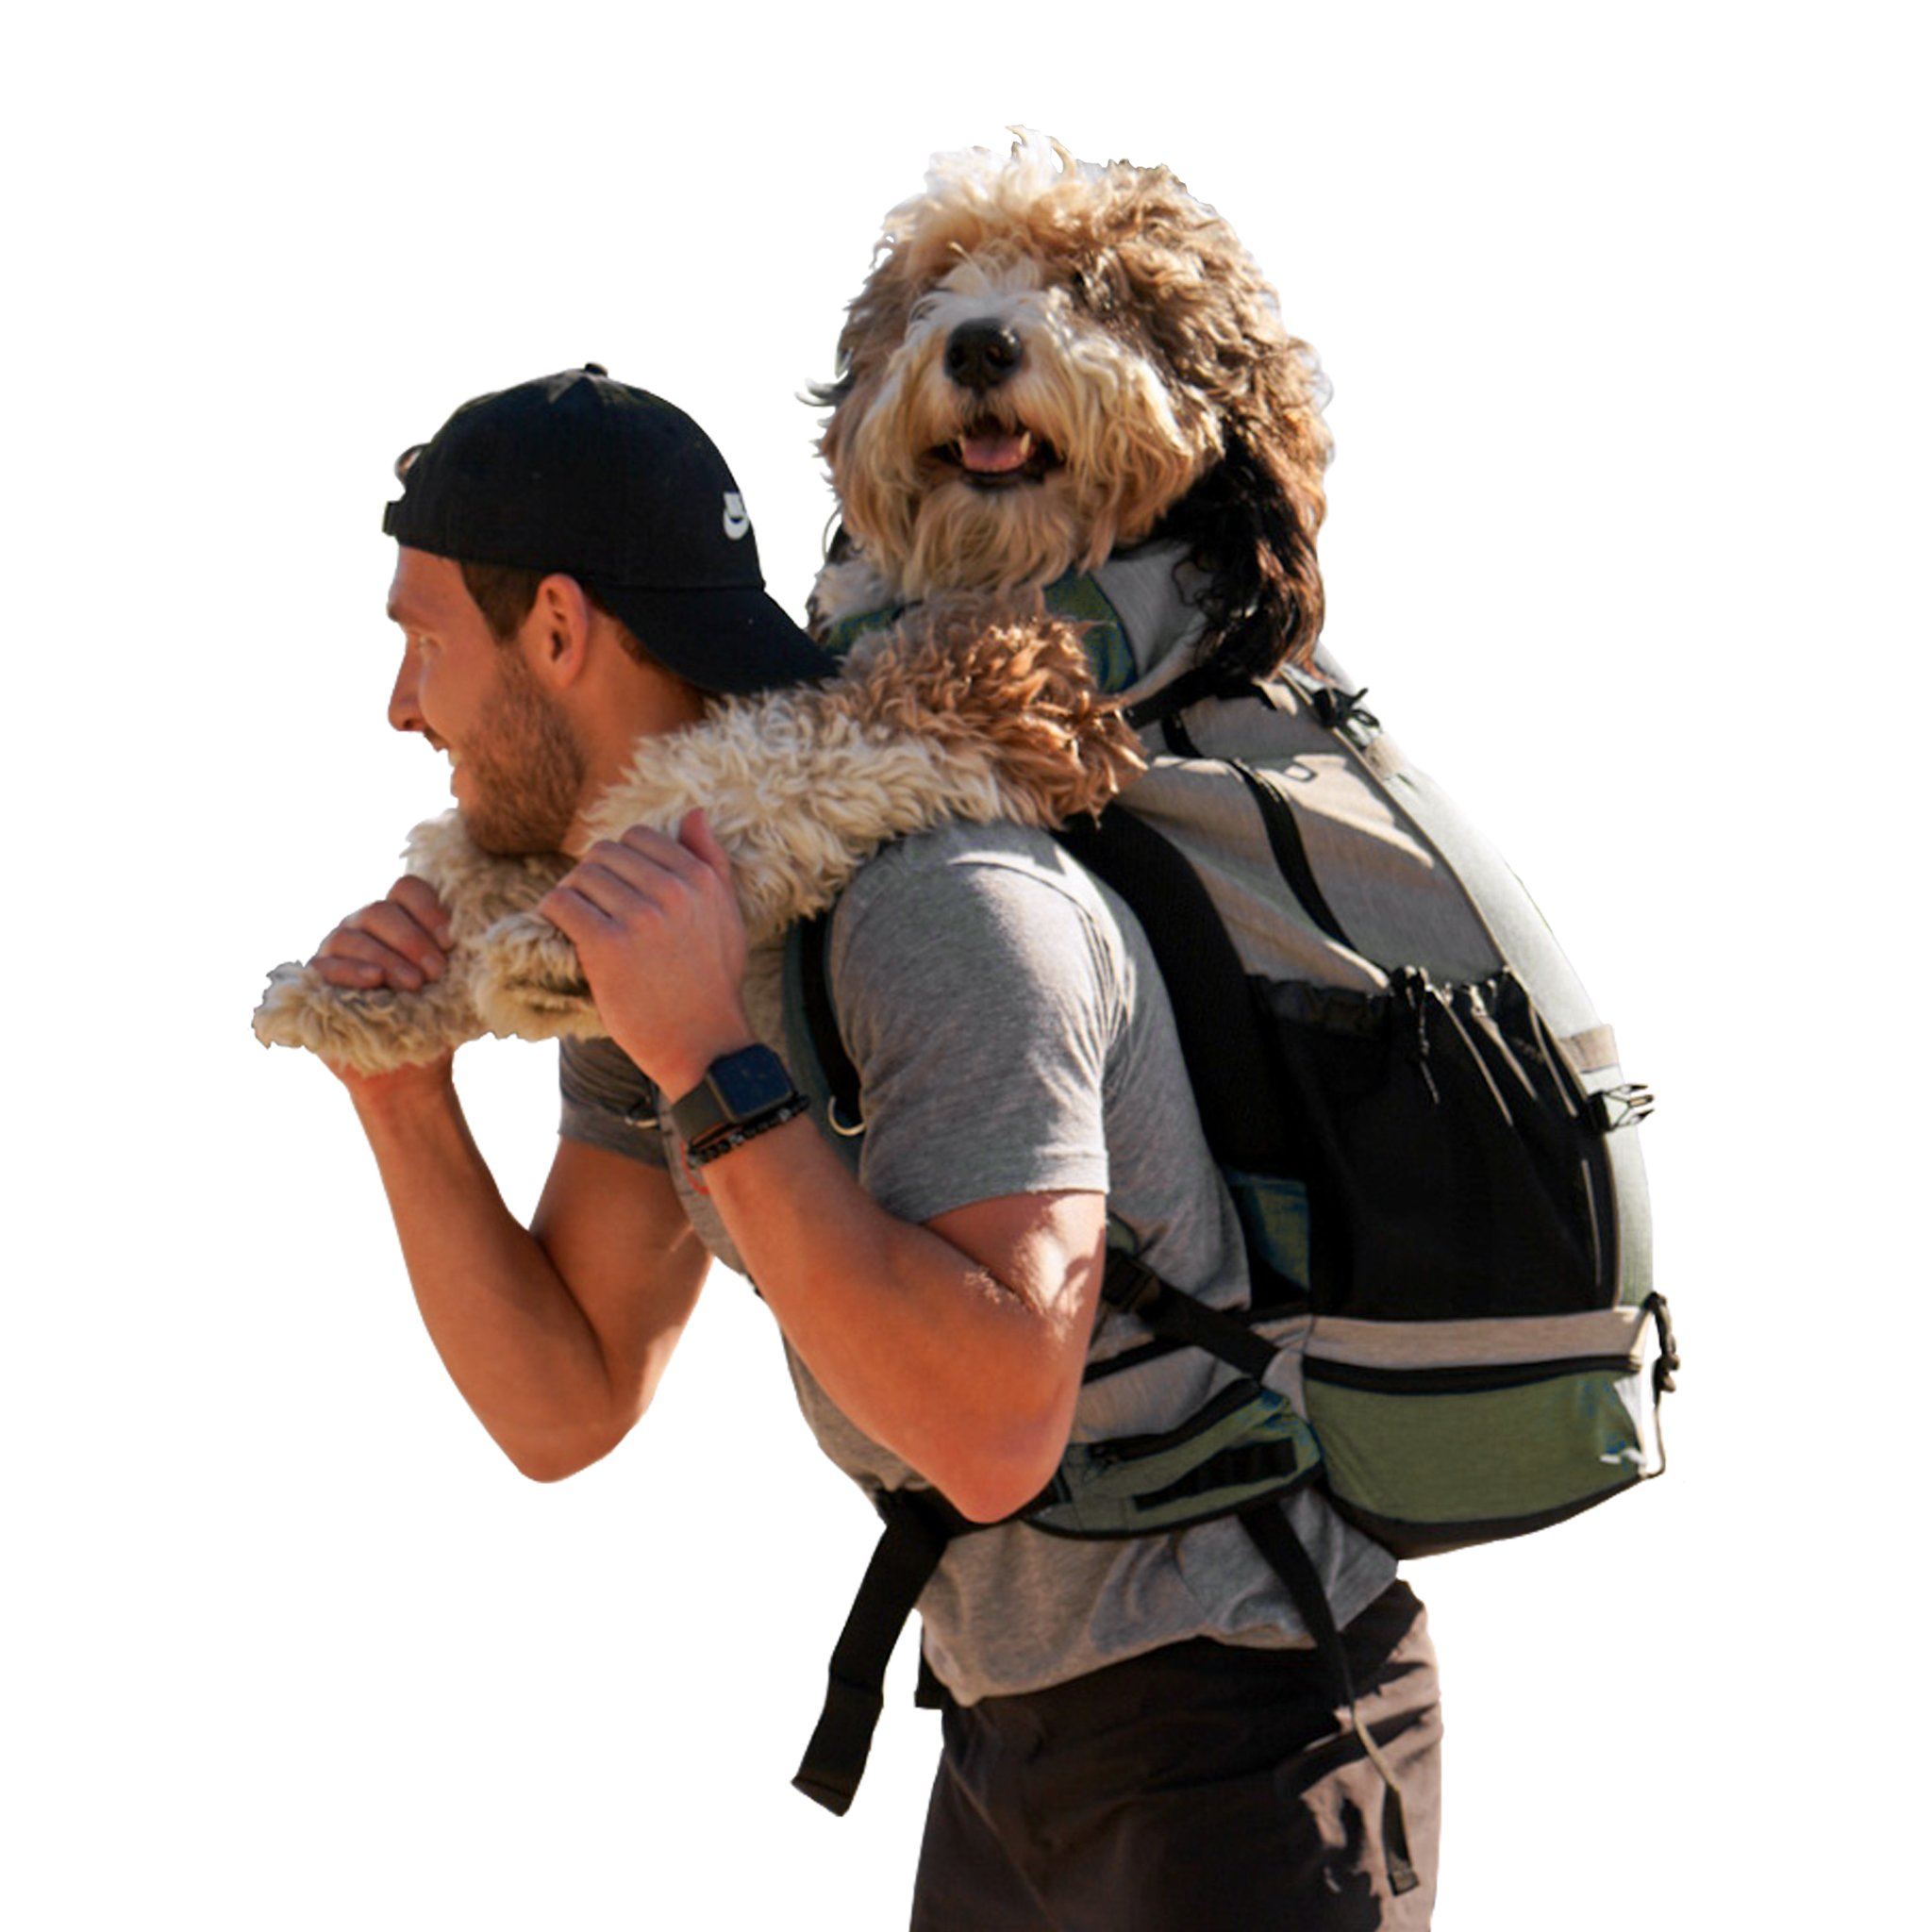 dog carry bags australia